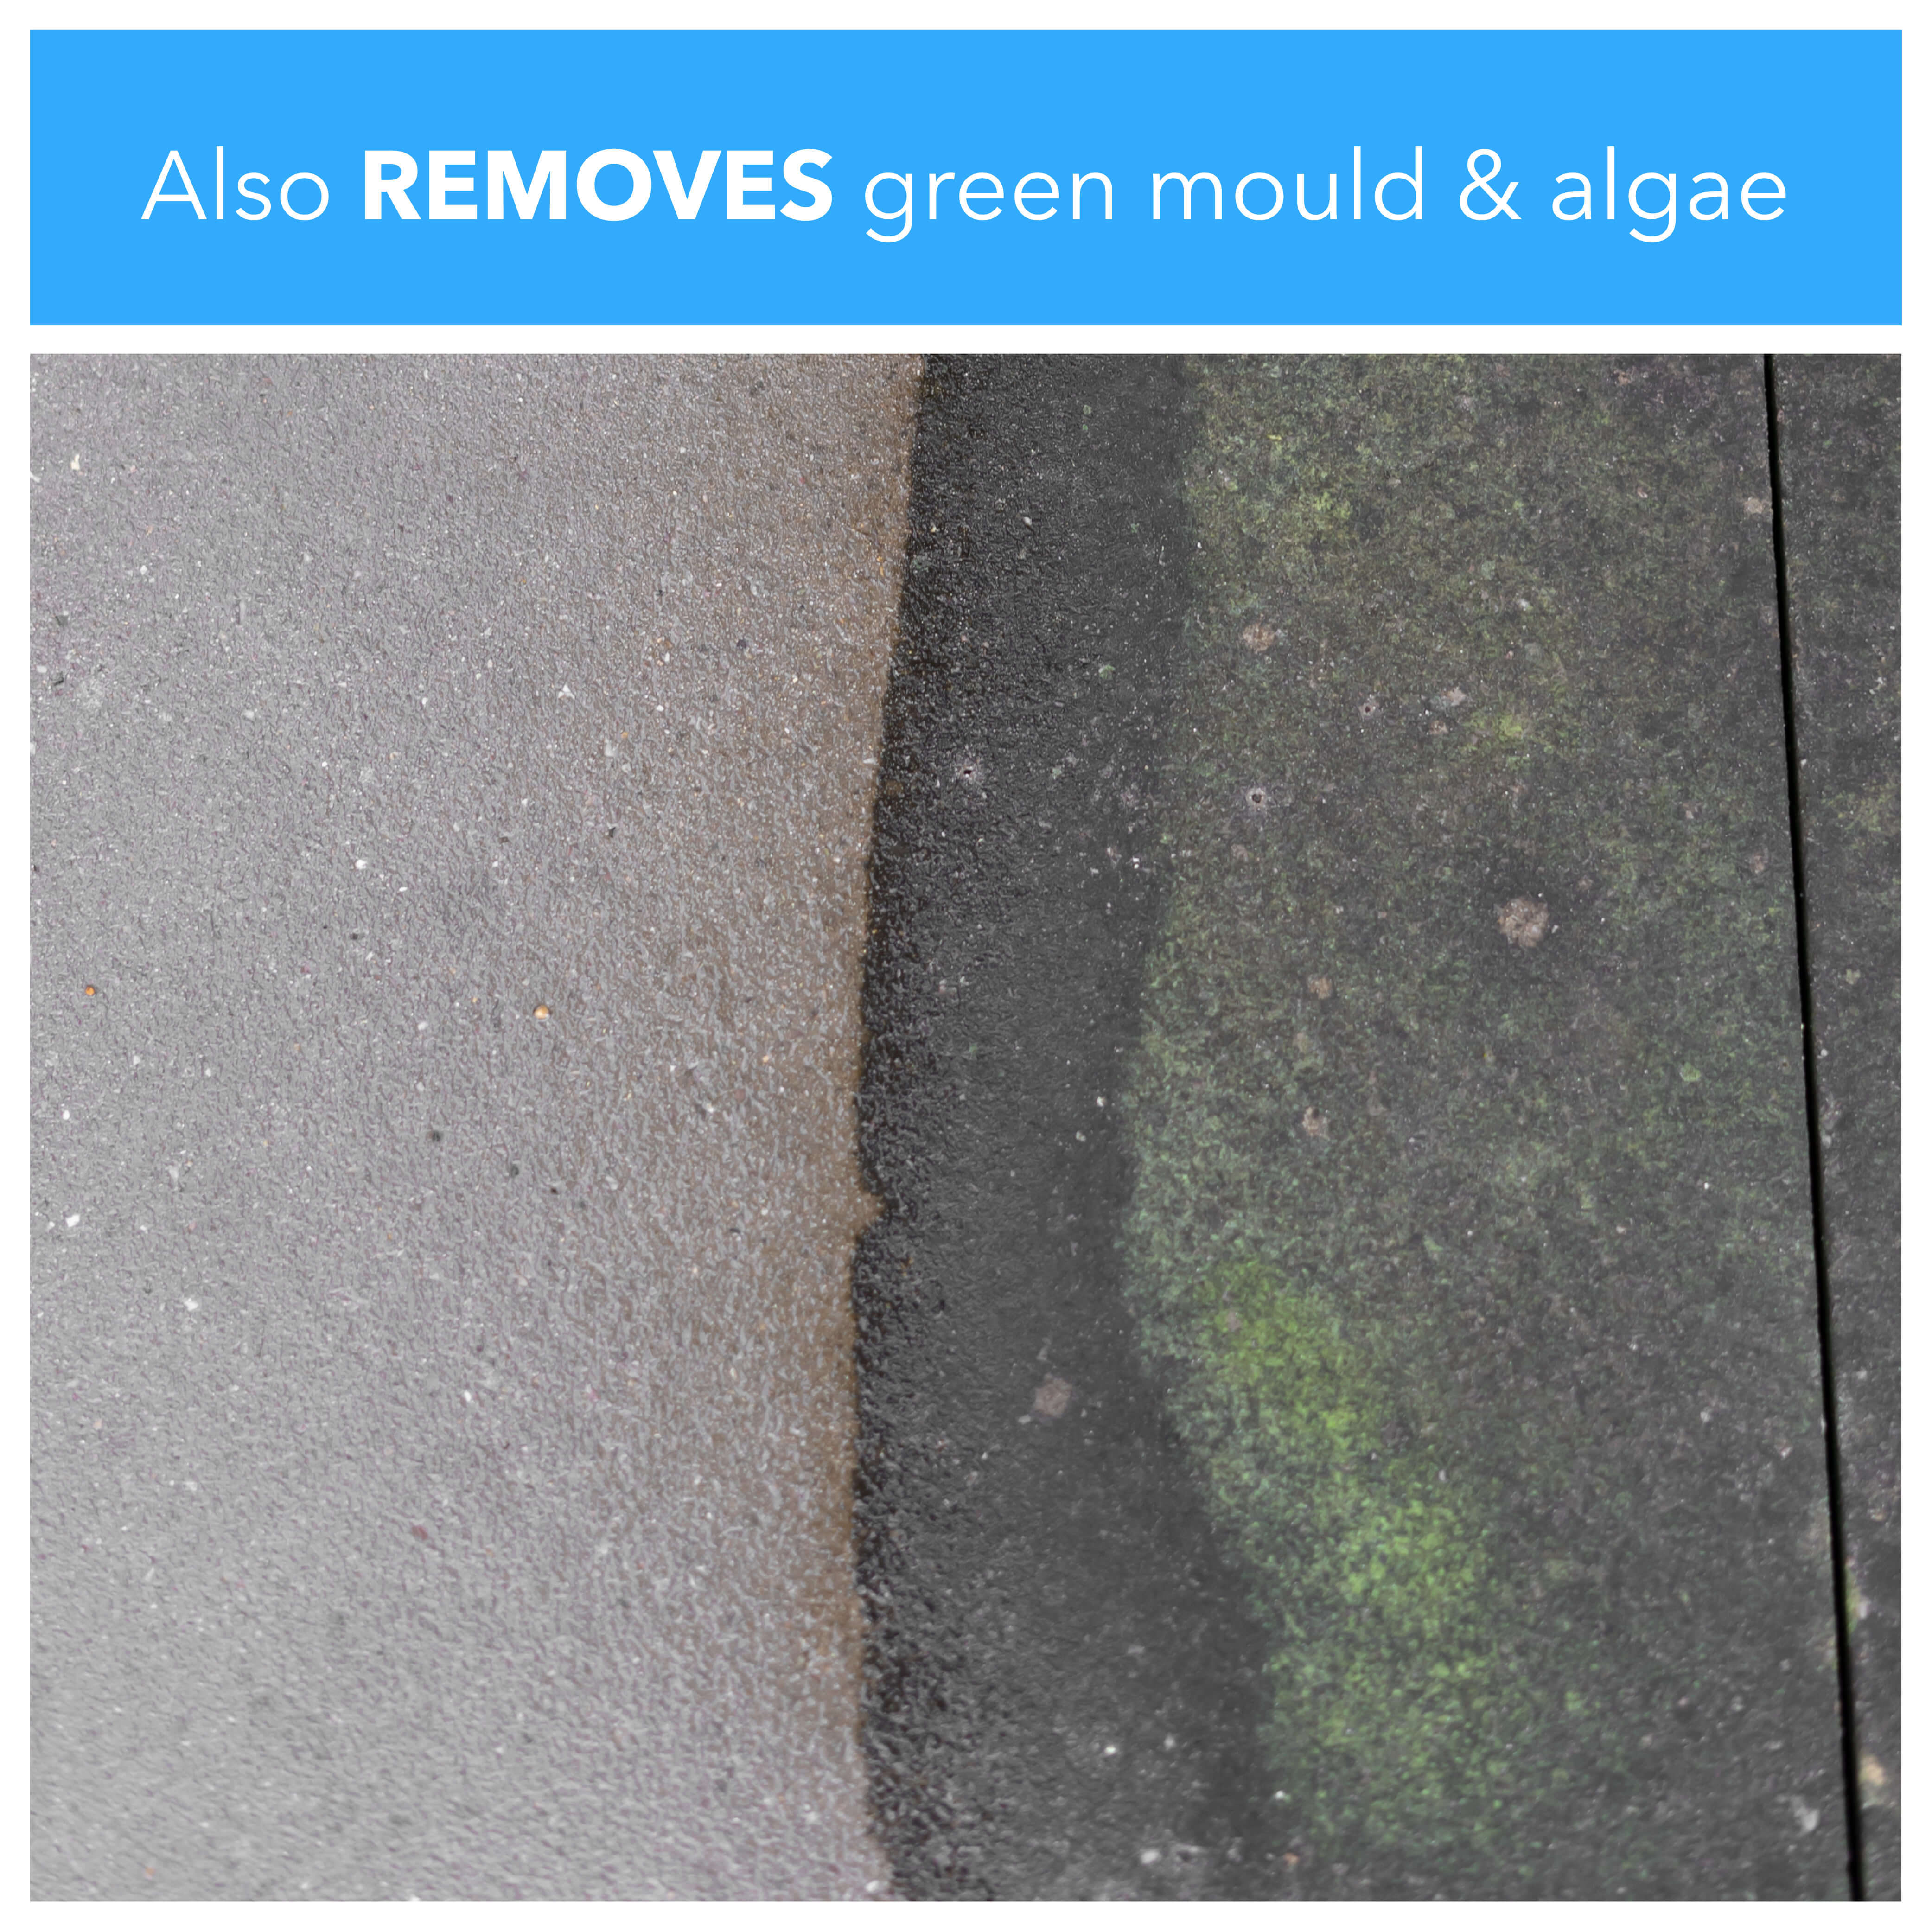 Also removes green mould & algae